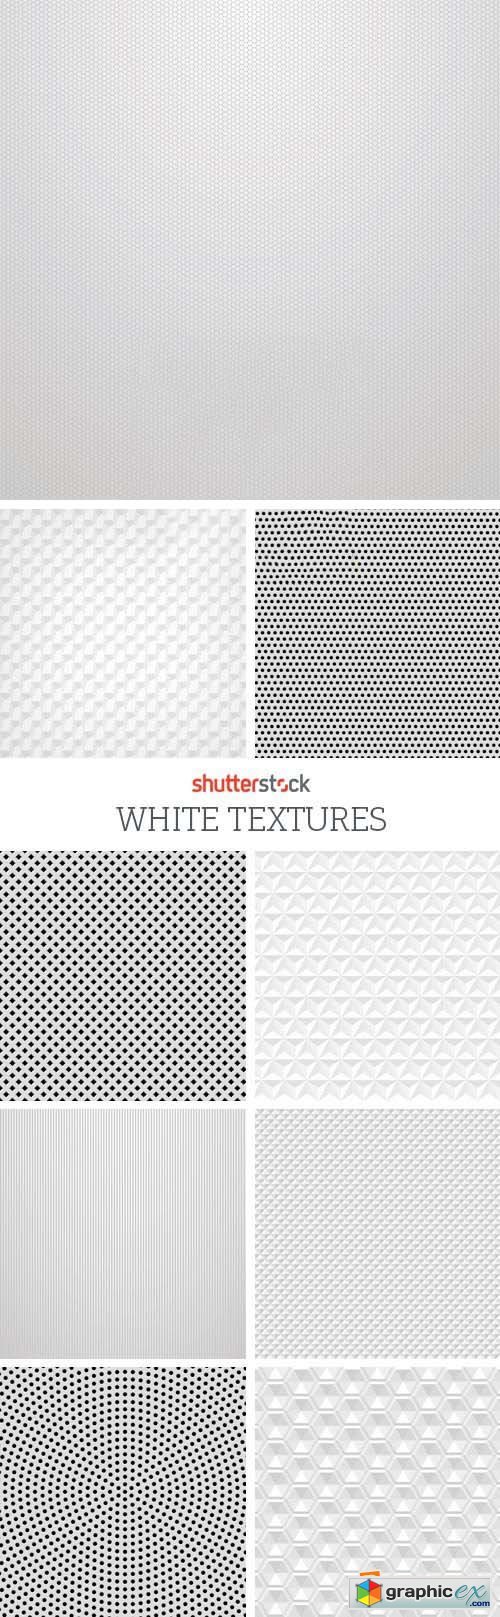 Amazing SS - White Textures, 25xEPS